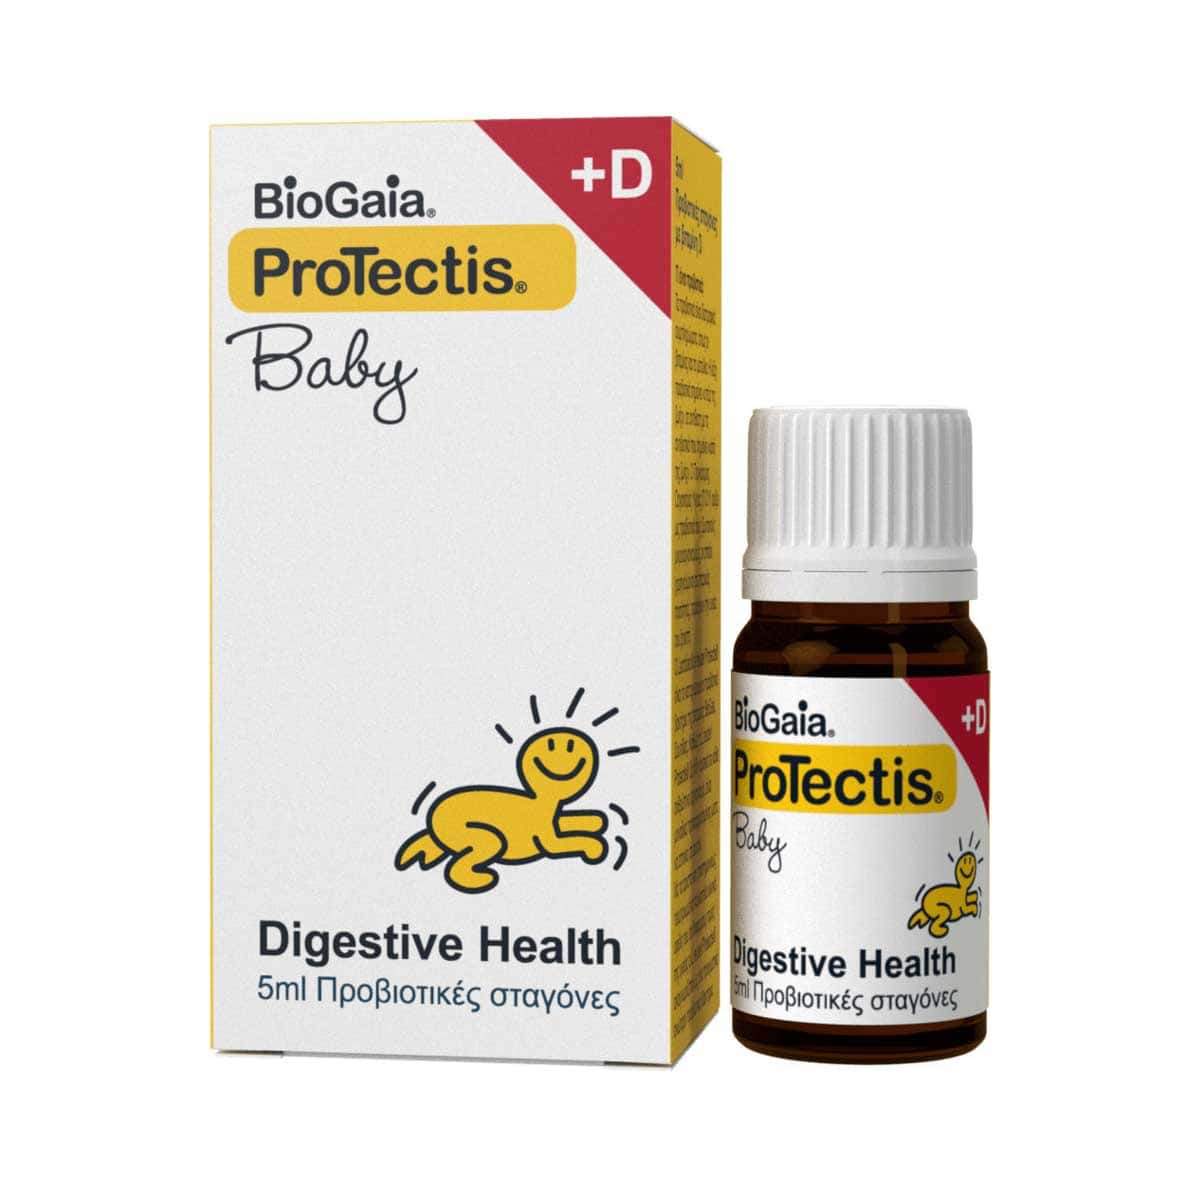 BioGaia-ProTectis-+-D3-drops-5-ml-7350012551629